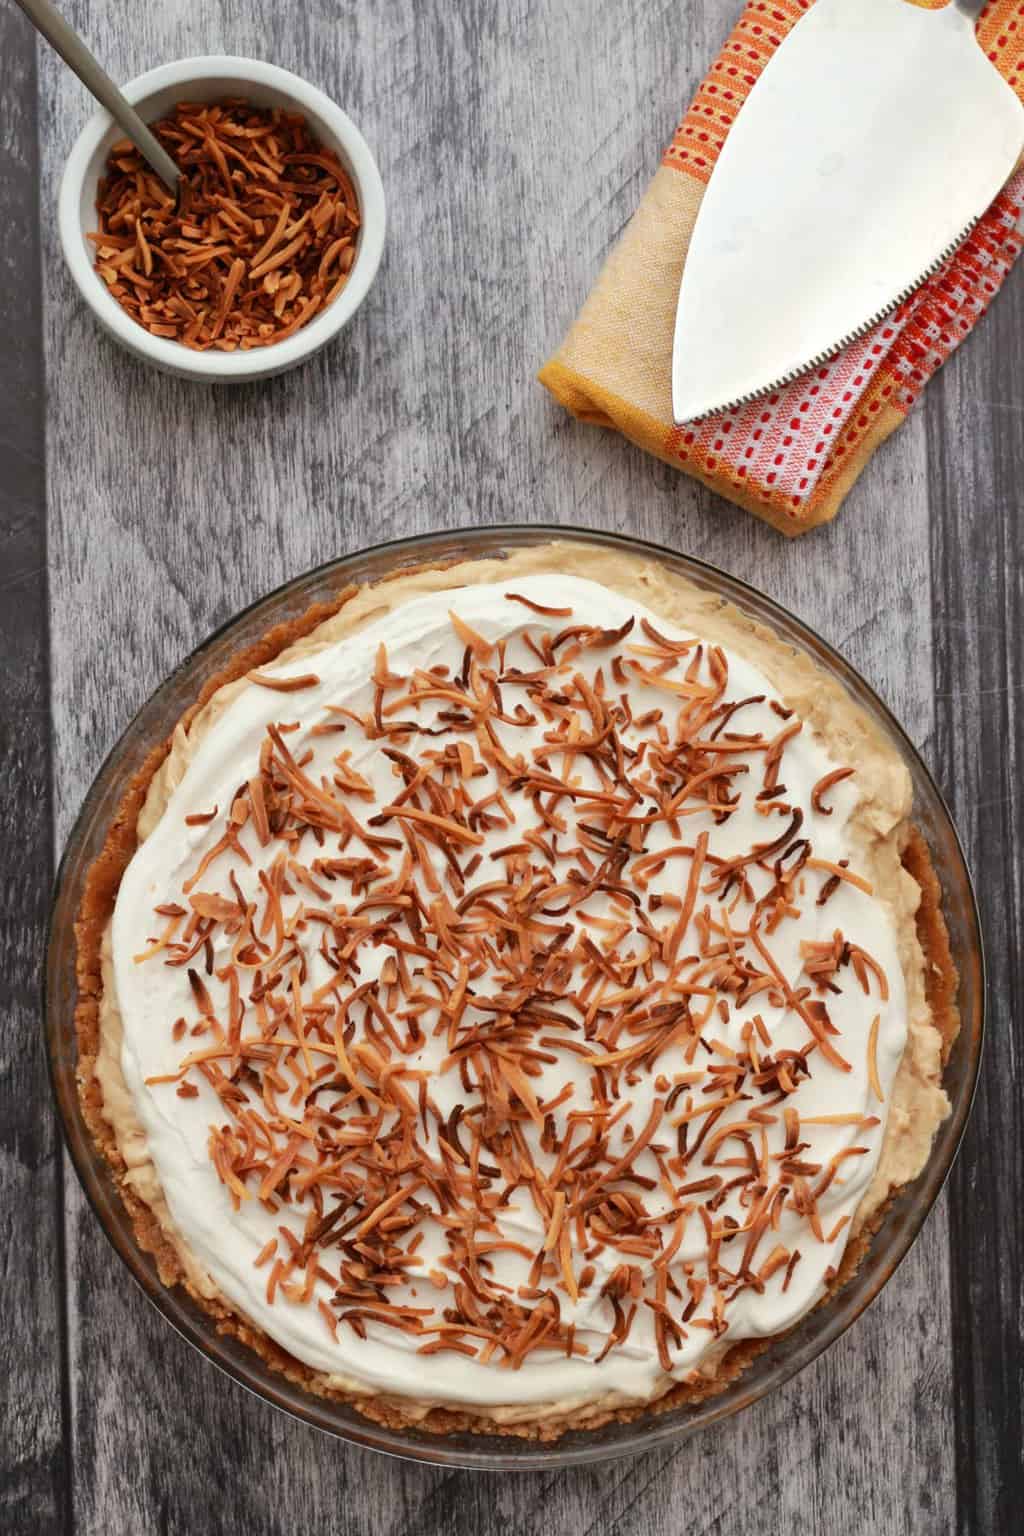 Vegan Coconut Cream Pie. 3-layers of deliciousness topped with toasted coconut flakes! Vegan and gluten-free! #vegan #lovingitvegan #dessert #pie #glutenfree #dairyfree